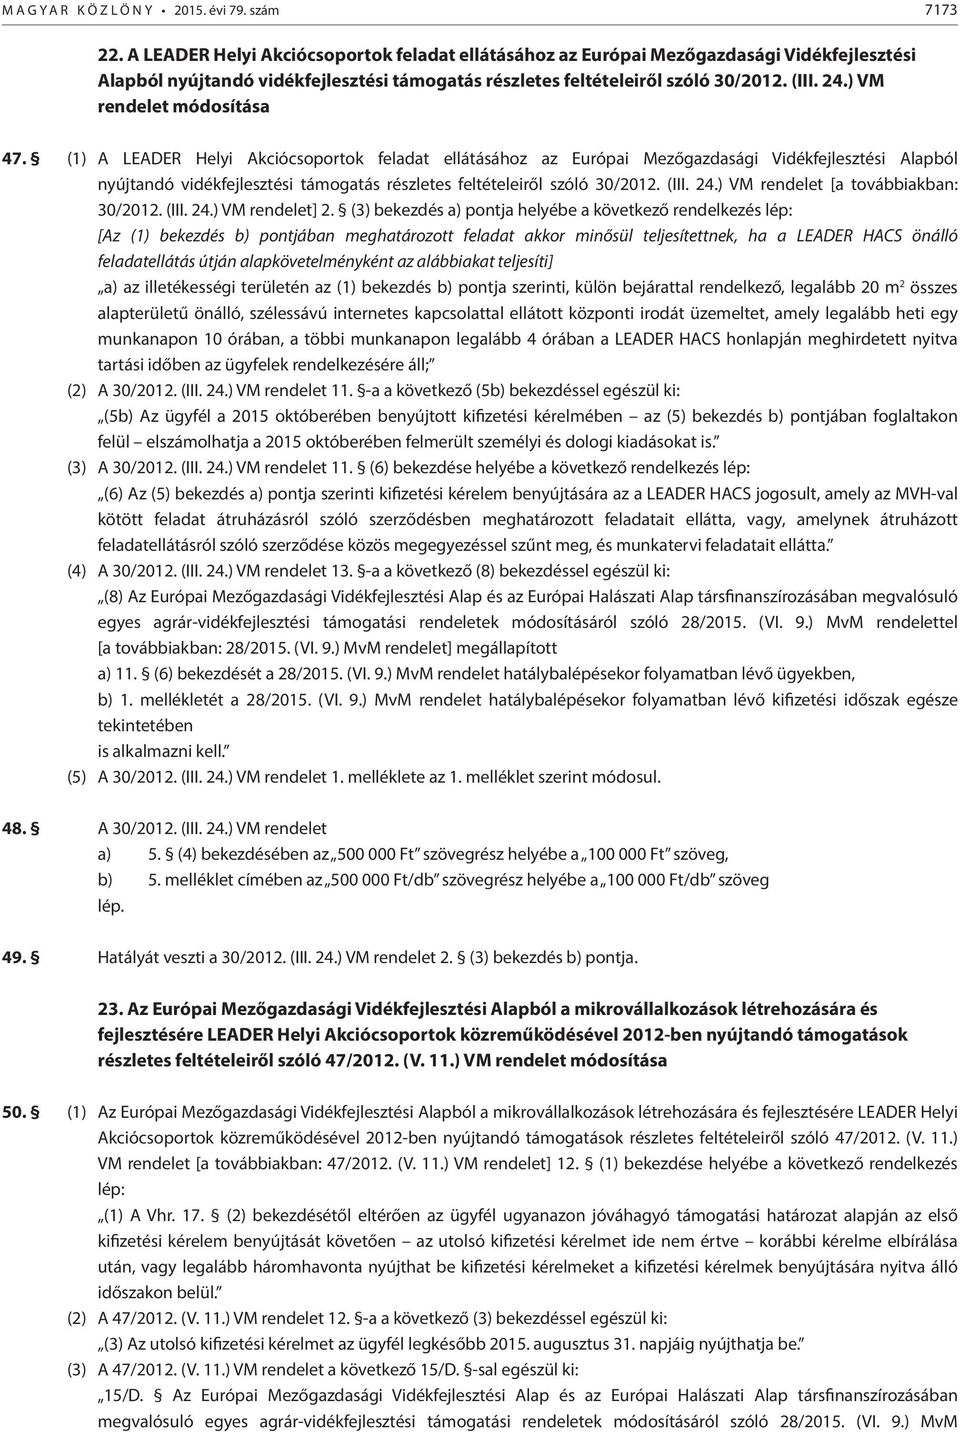 ) VM rendelet 47. (1) ) VM rendelet [a továbbiakban: 30/2012. (III. 24.) VM rendelet] 2.